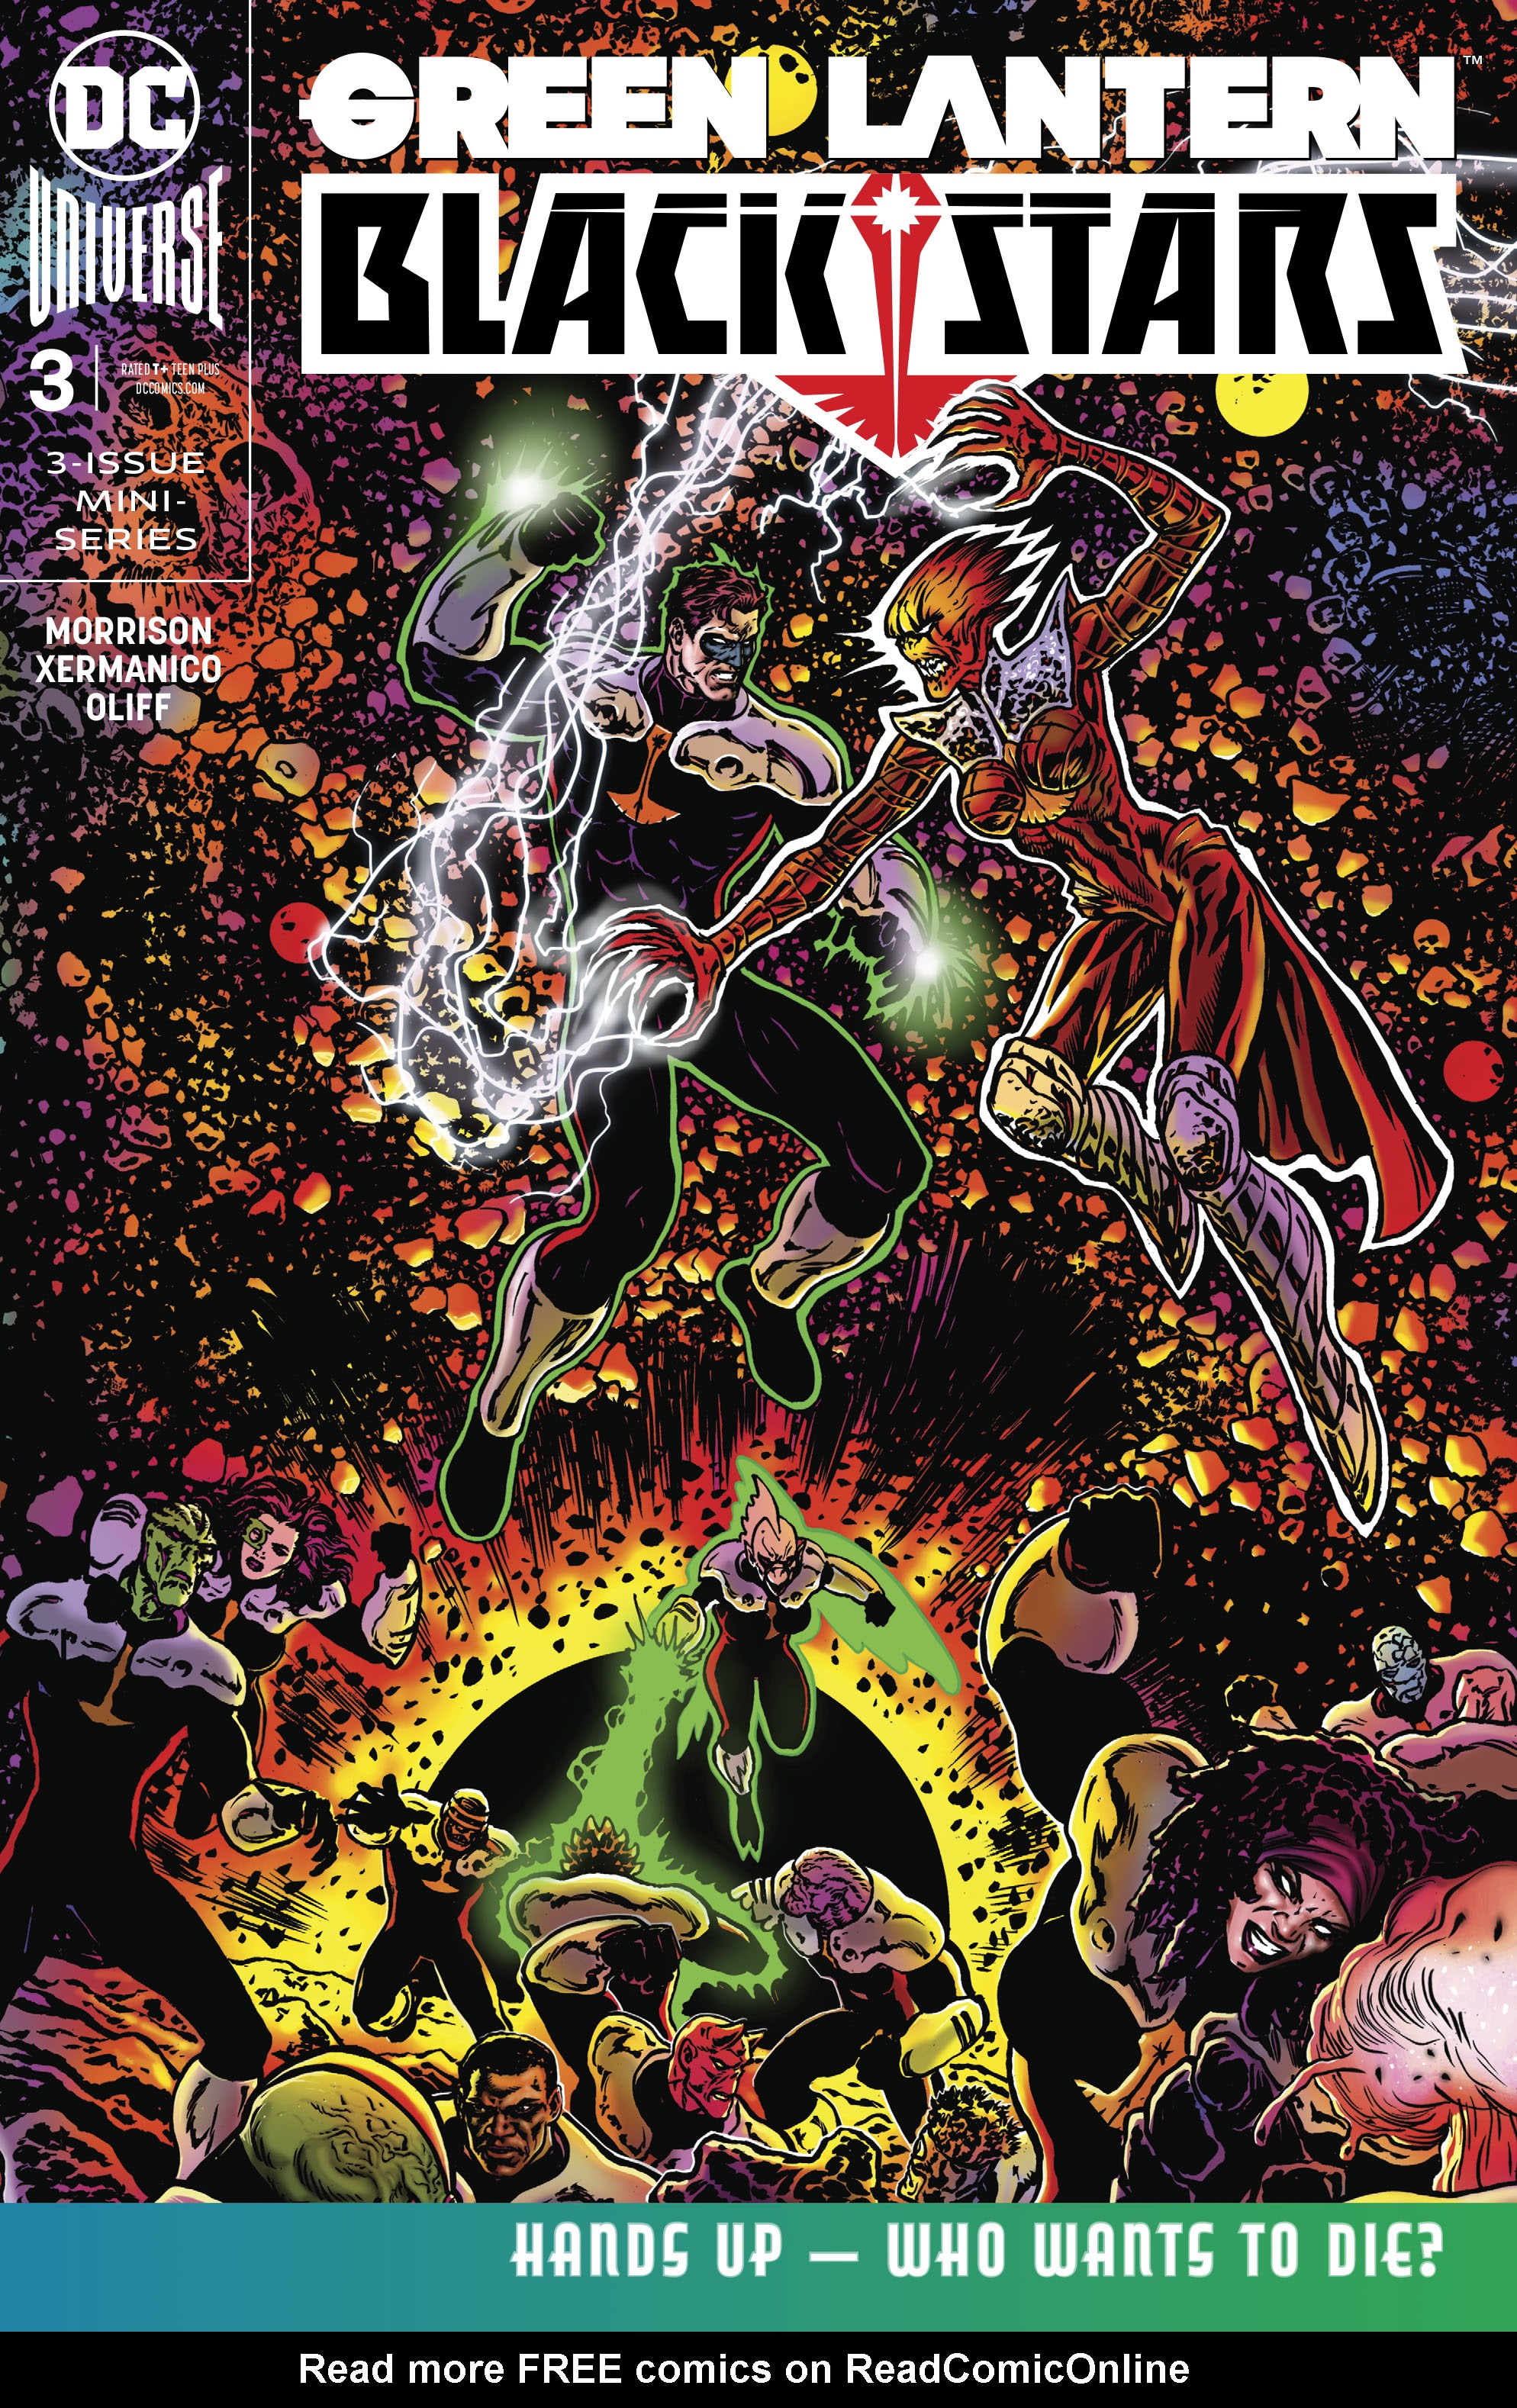 Read online Green Lantern: Blackstars comic -  Issue #3 - 1